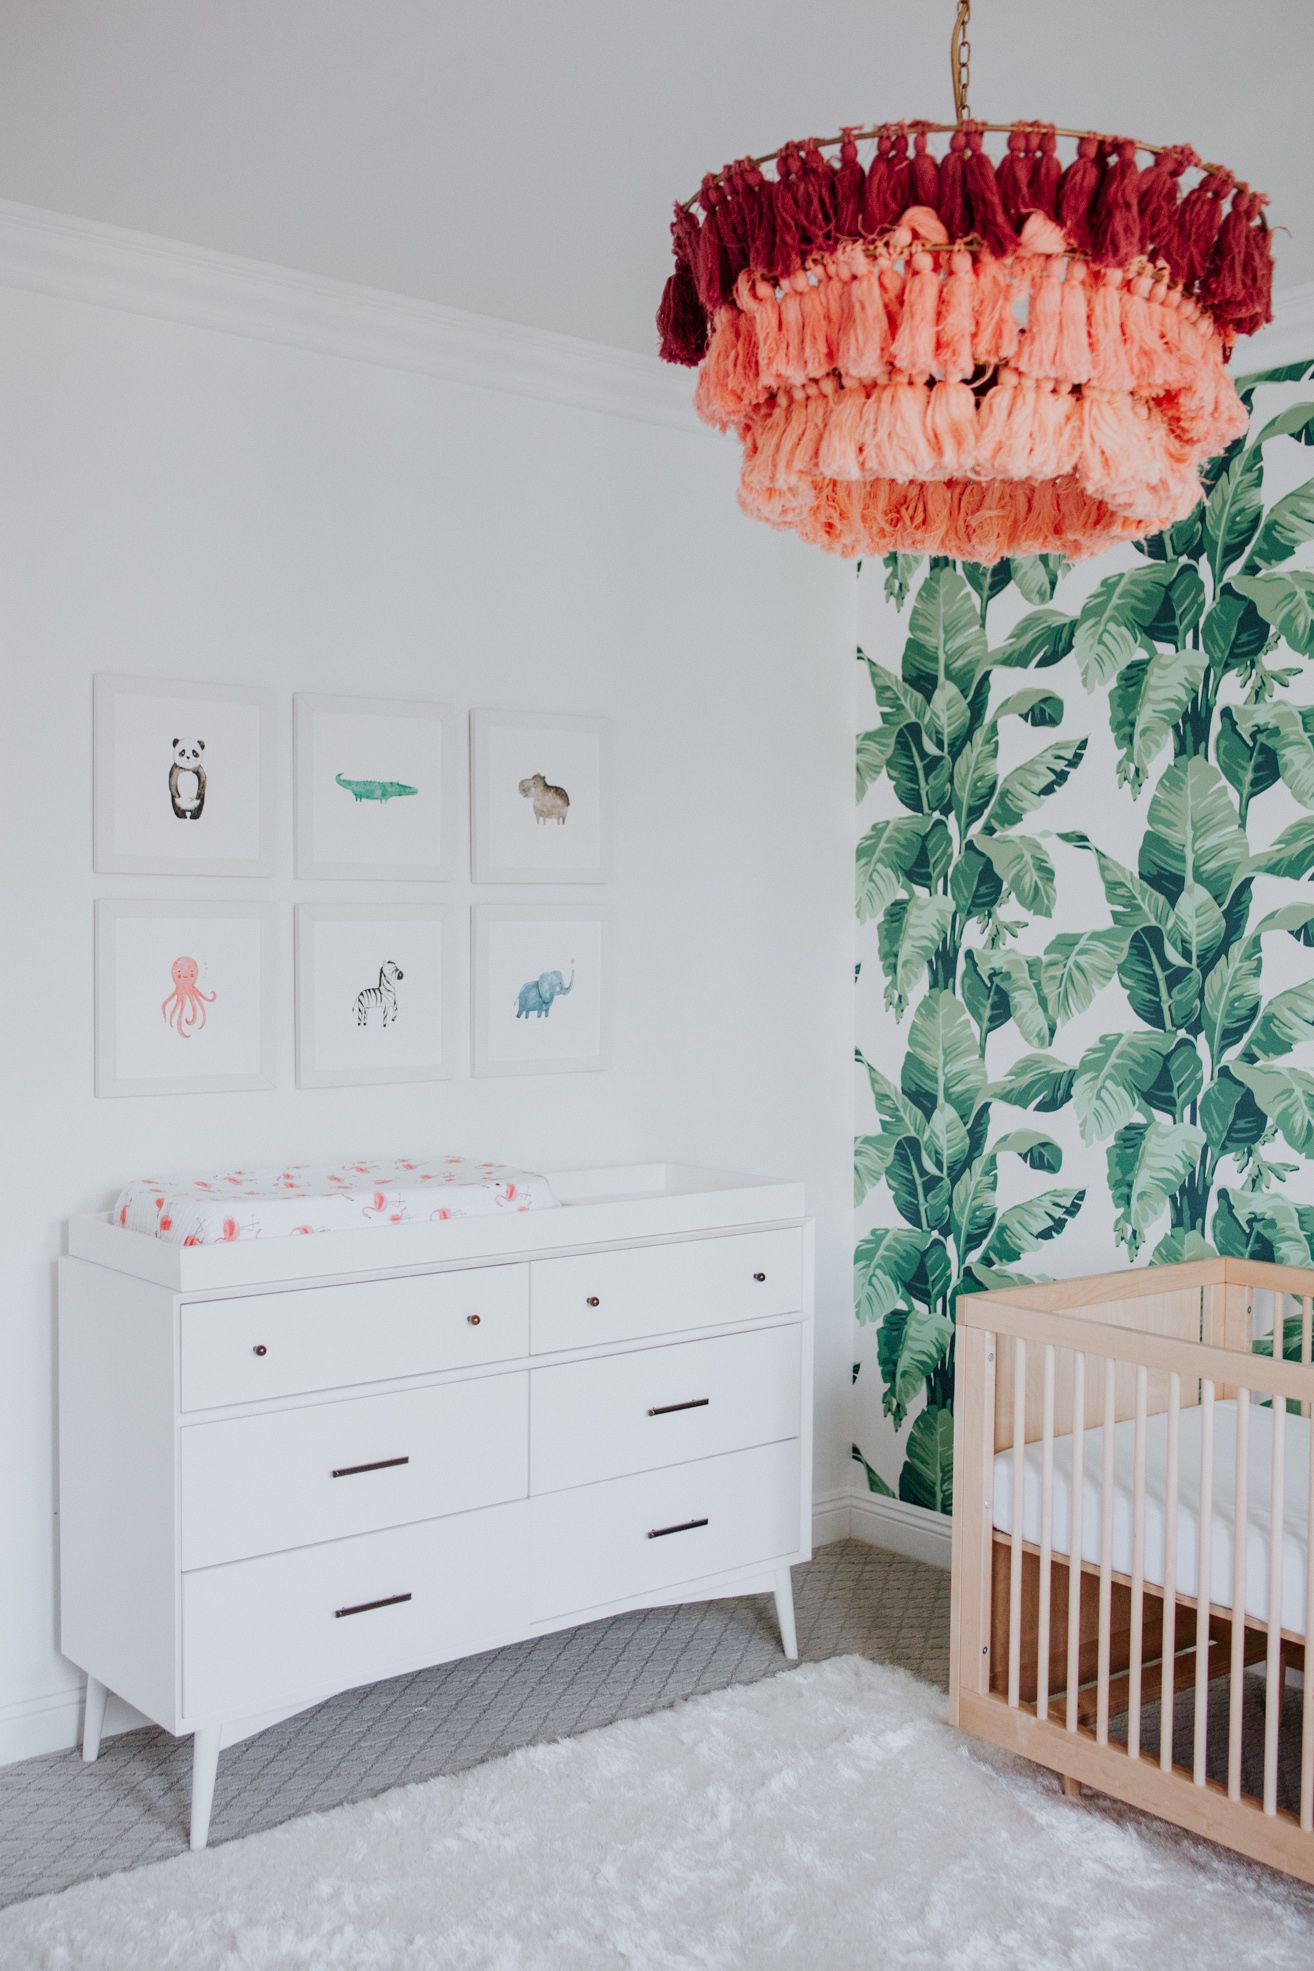 born baby room decoration